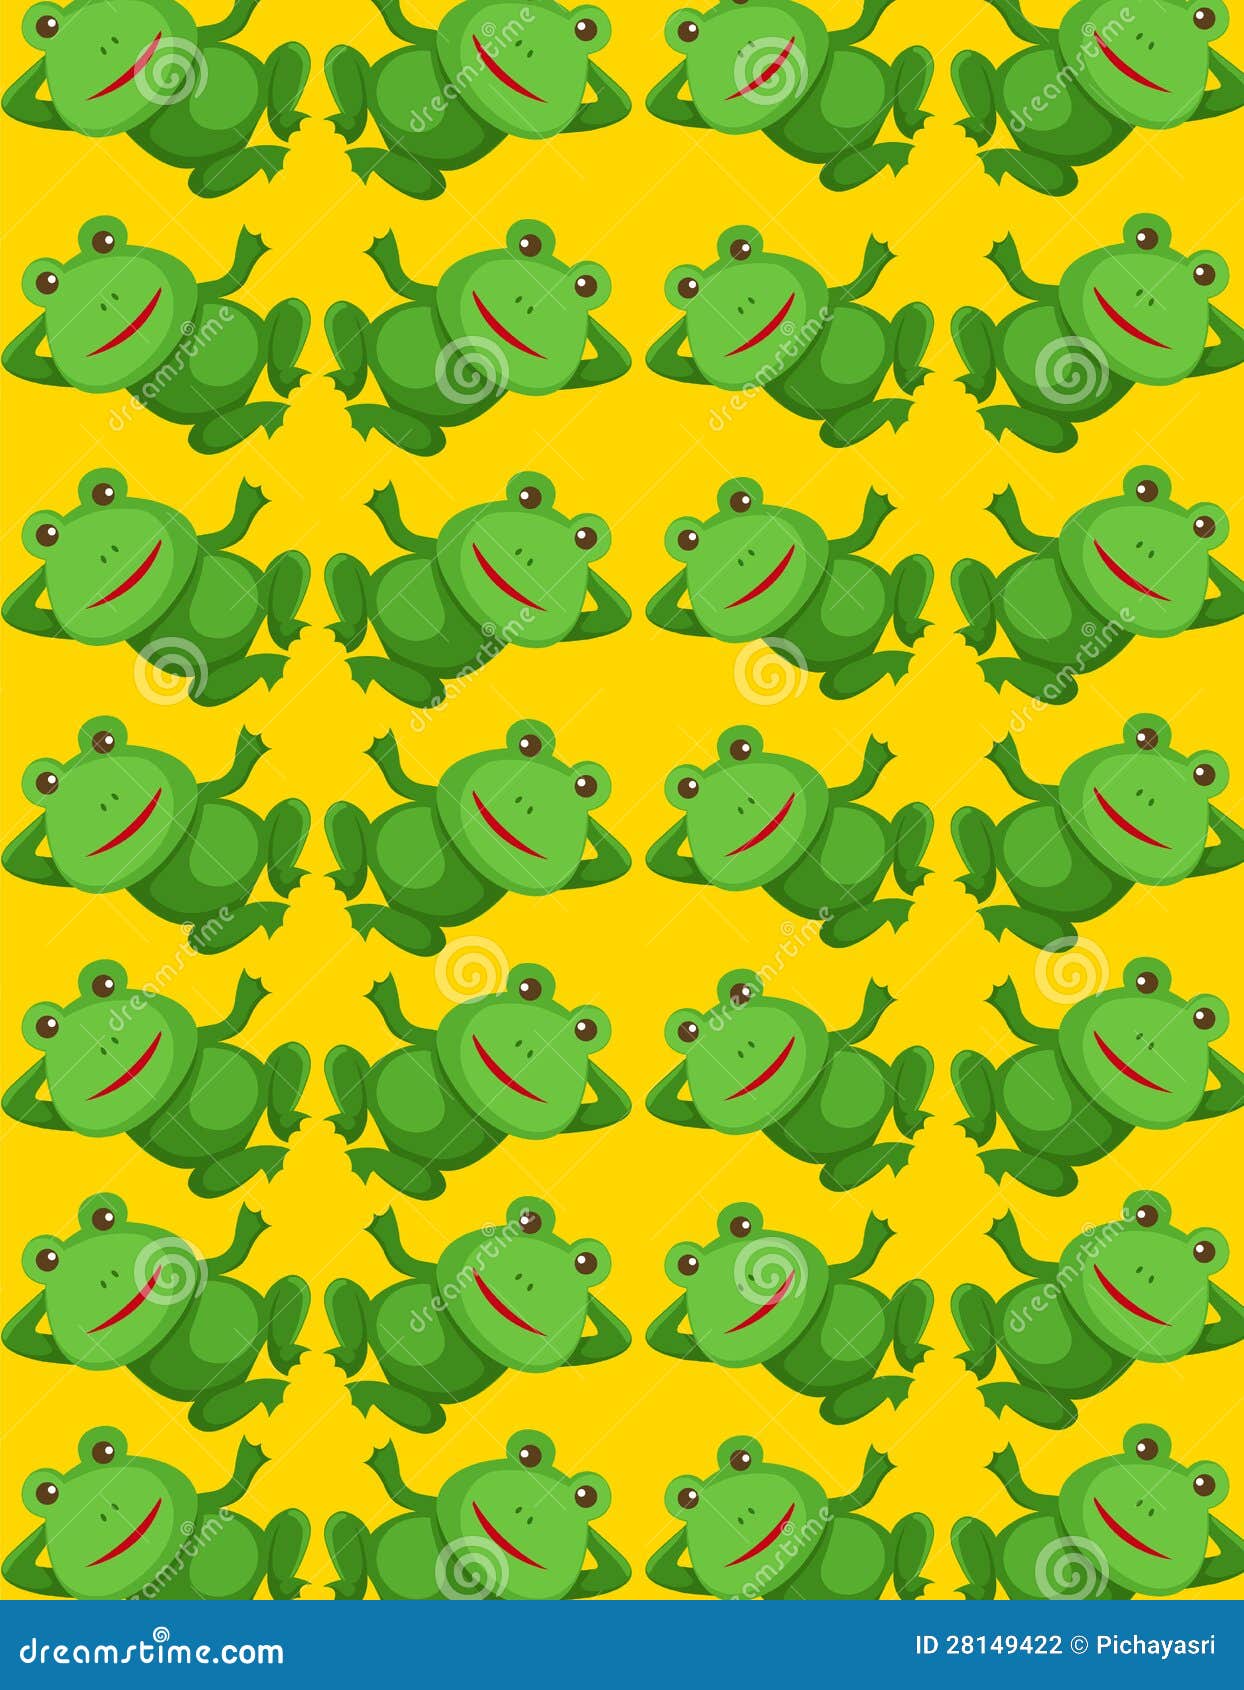 Wallpaper cute frog stock vector. Illustration of drawing - 28149422